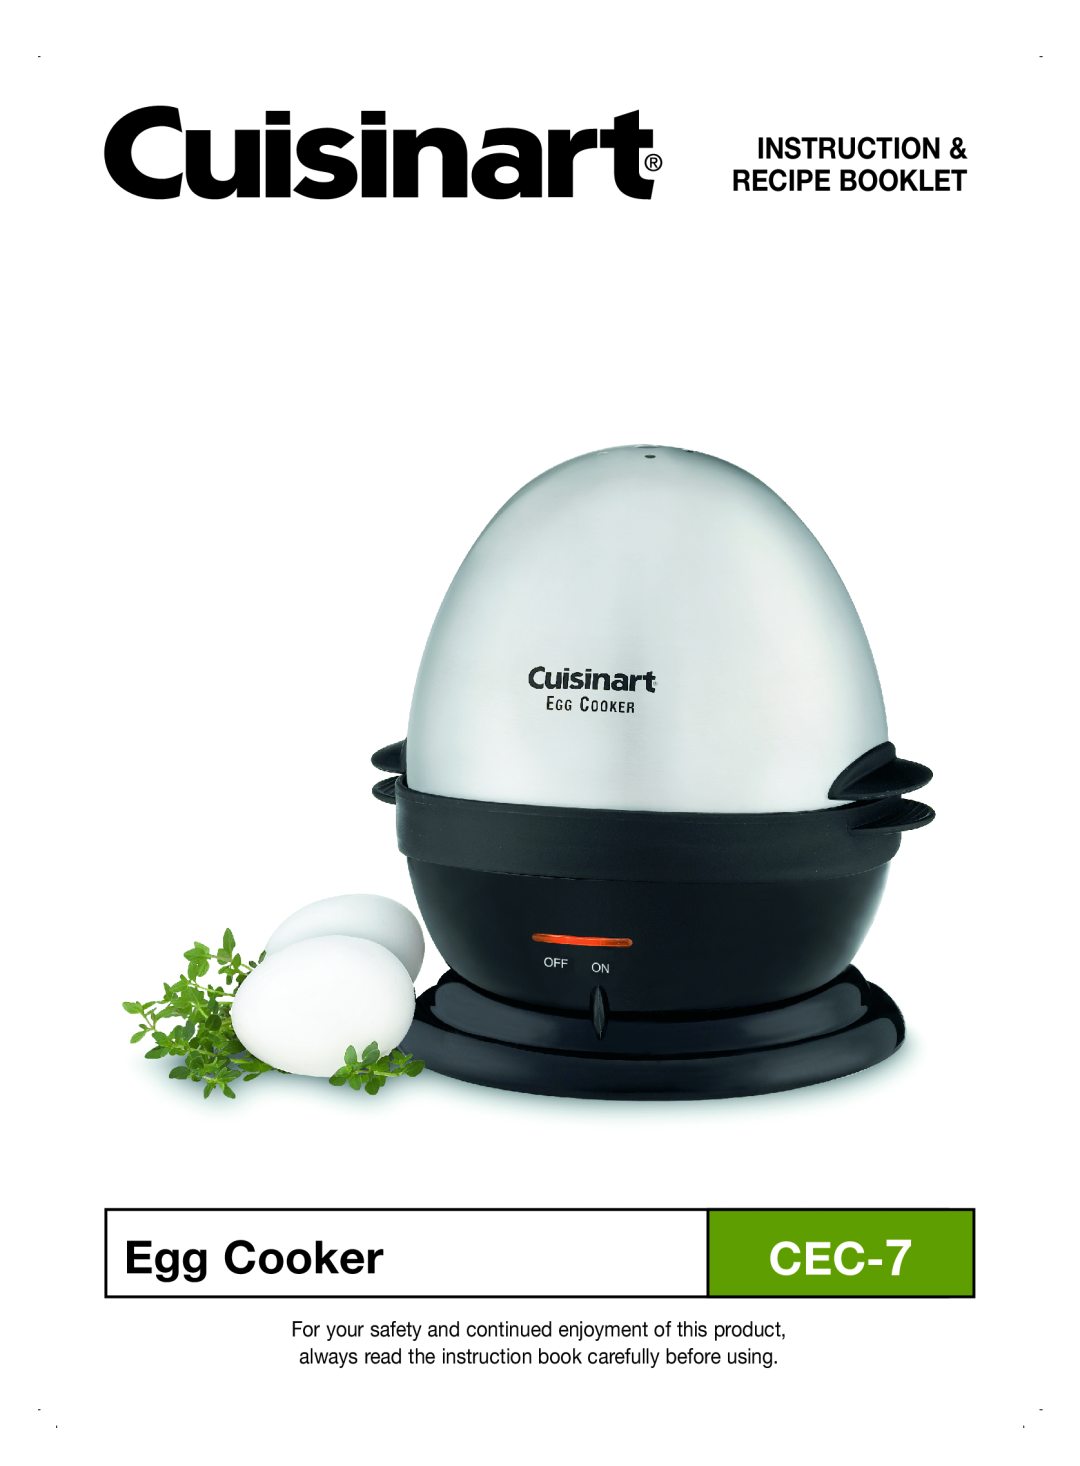 Cuisinart CEC-7 manual Egg Cooker, Instruction & Recipe Booklet 